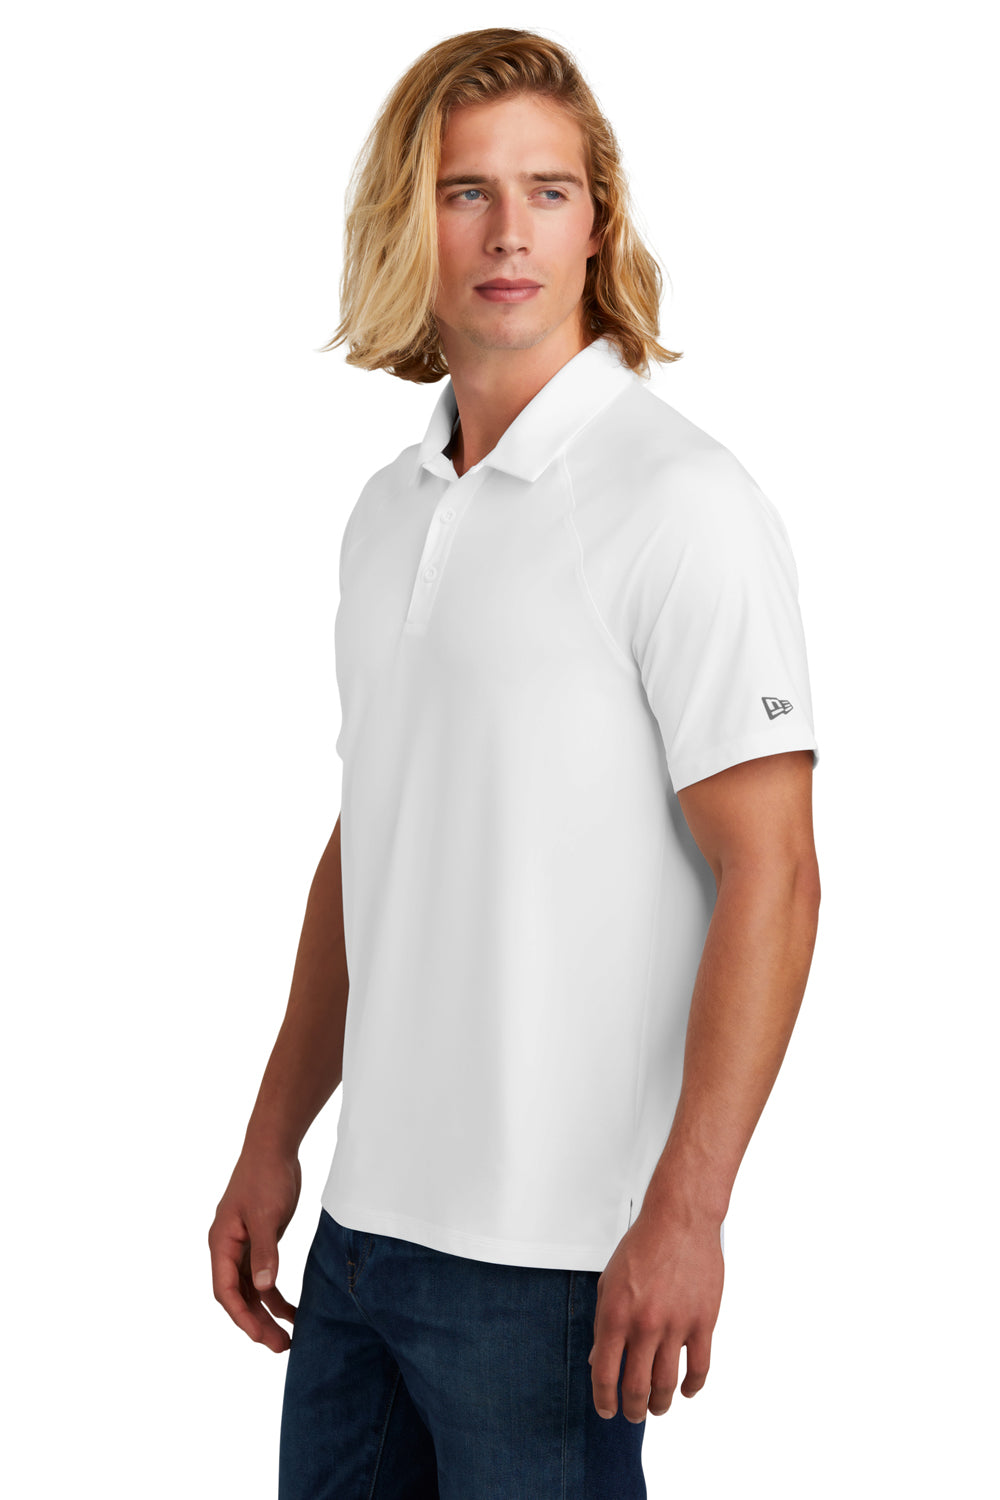 New Era Mens Power Short Sleeve Polo Shirt White Side